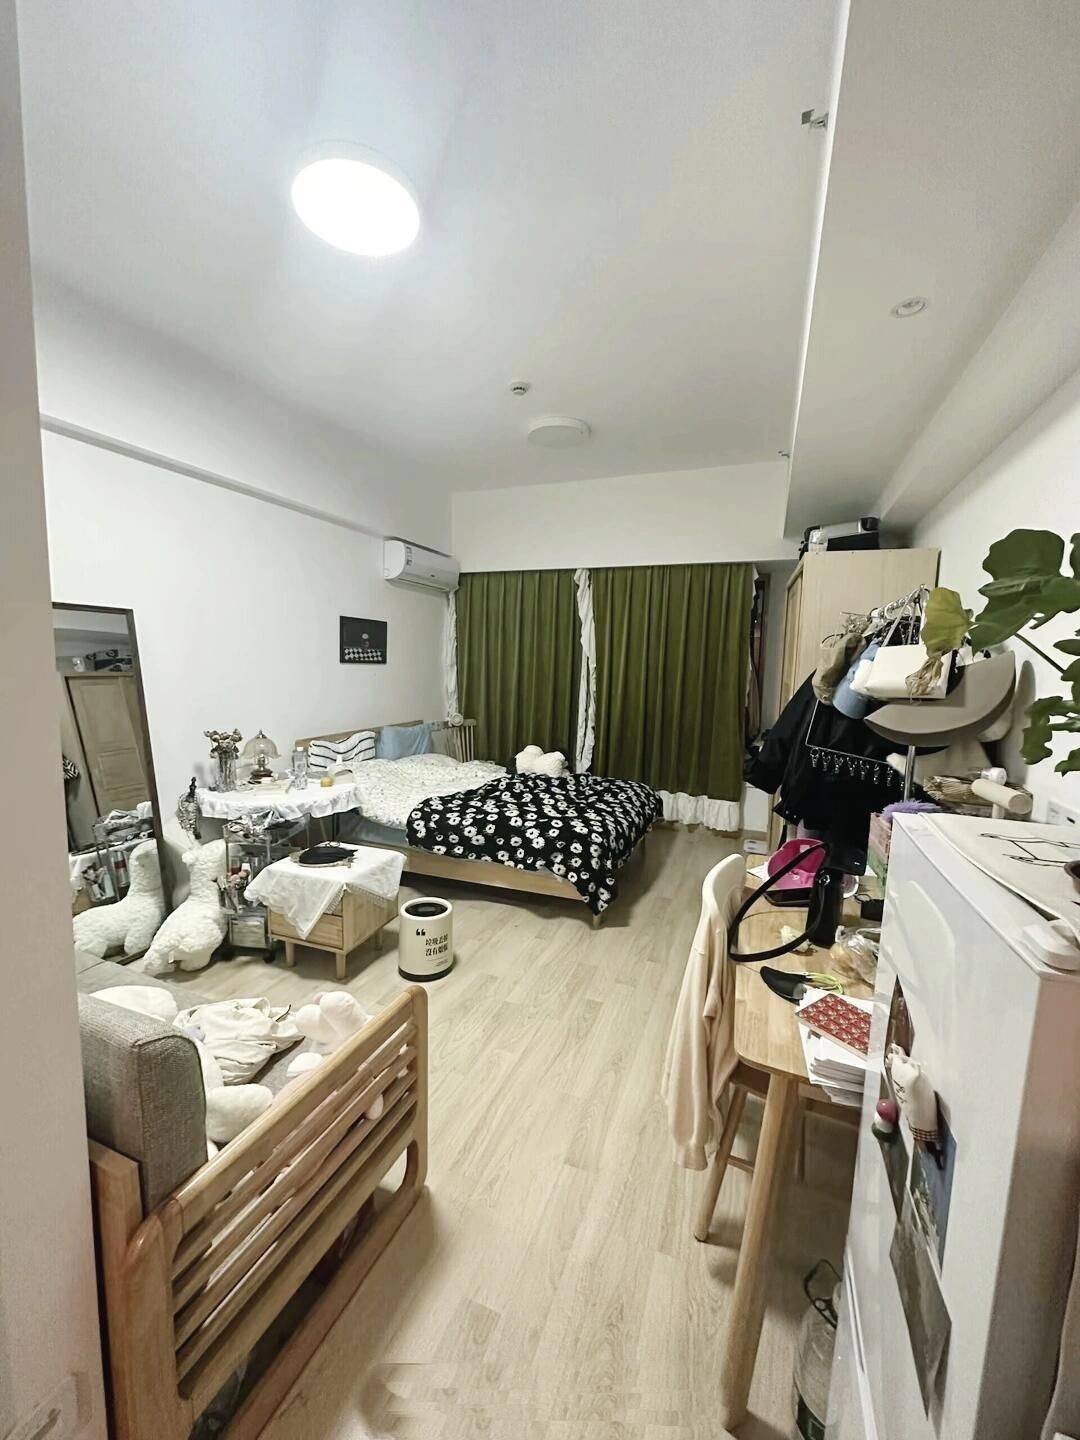 Ningbo-Haishu-Cozy Home,Clean&Comfy,No Gender Limit,Hustle & Bustle,“Friends”,Chilled,LGBTQ Friendly,Pet Friendly